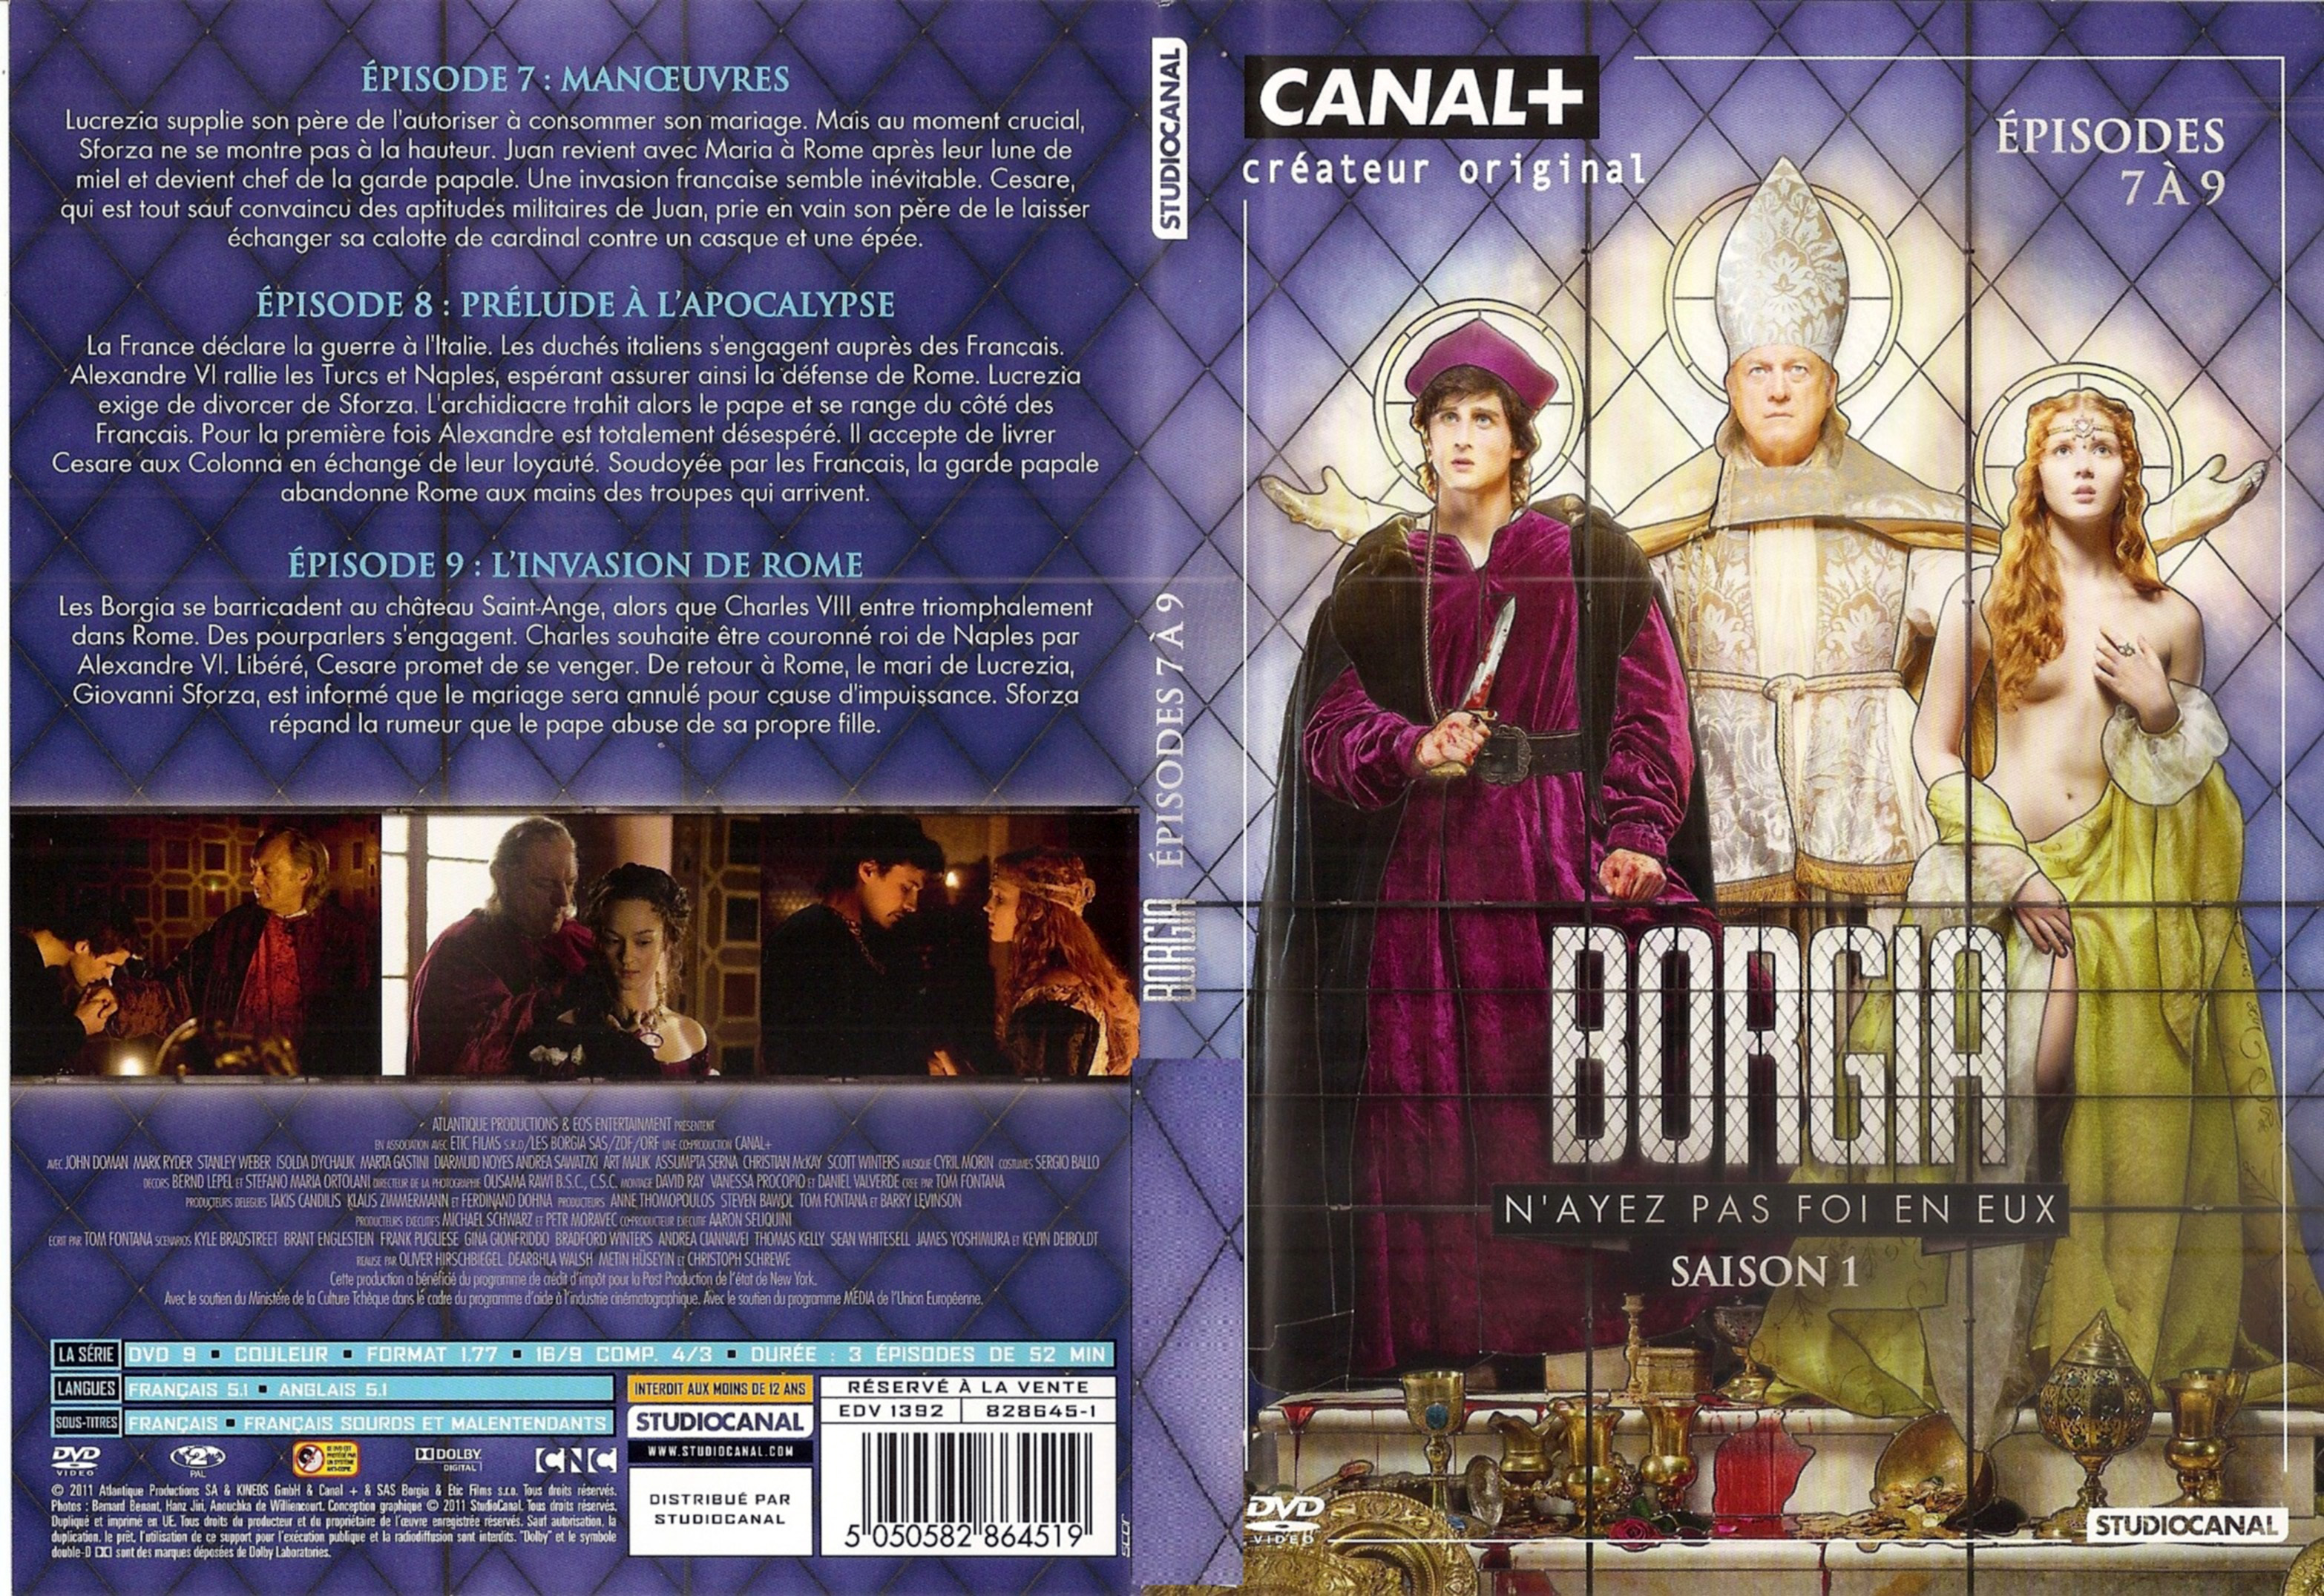 Jaquette DVD Borgia Saison 1 DVD 3